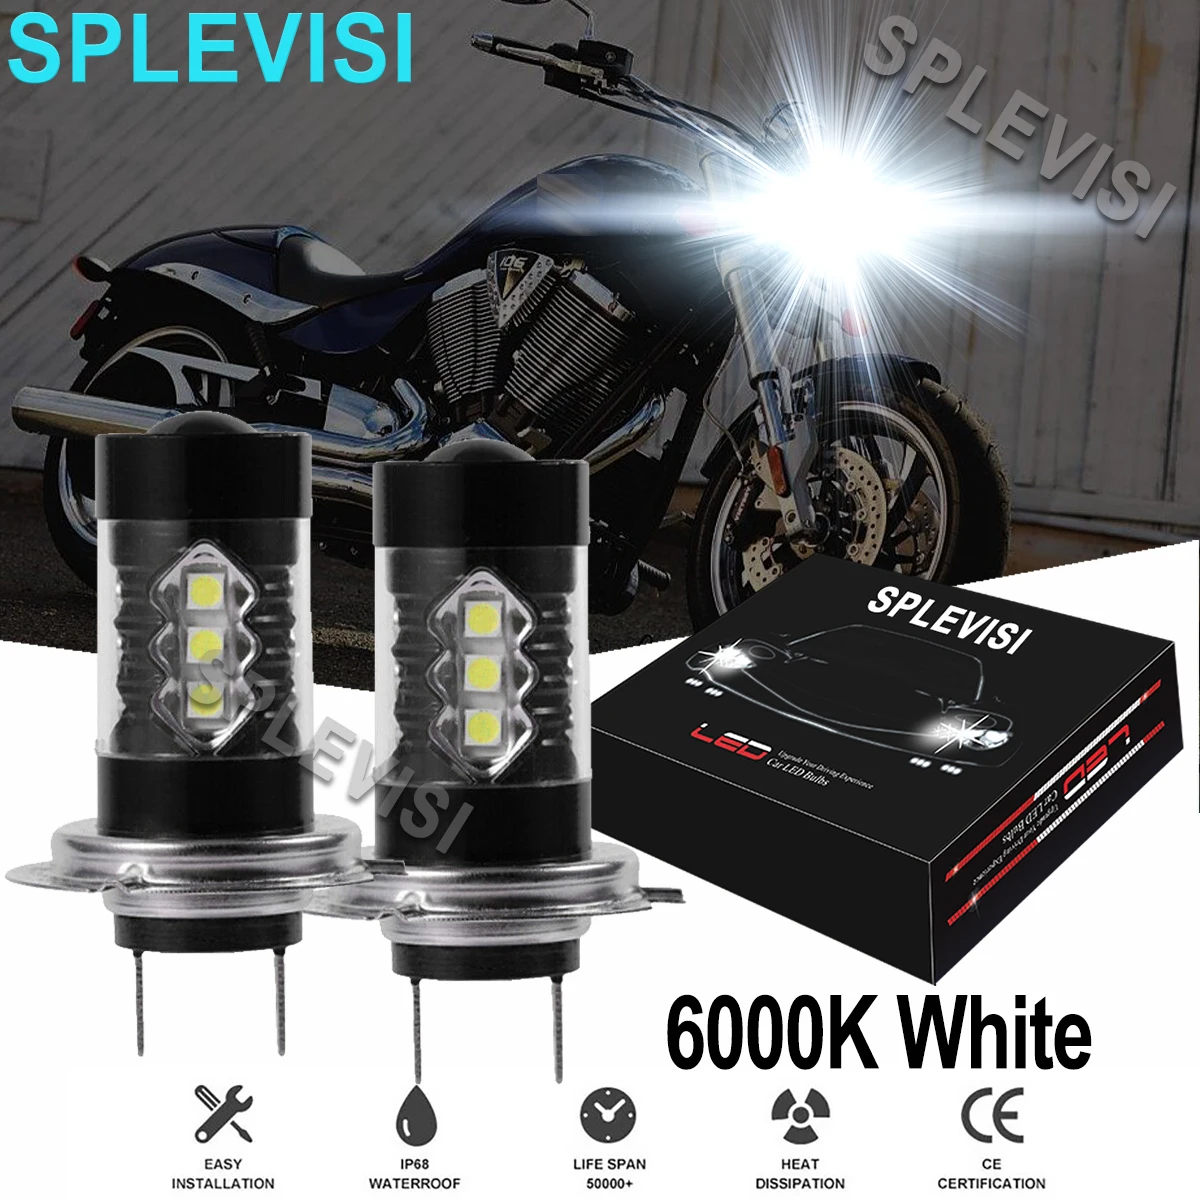 

2PCS 6000K Bright White 80W LED Motocycle Headlight Bulbs Kit For Victory Hammer S 2007-2008 Jackpot Arlen Ness 2007 2008